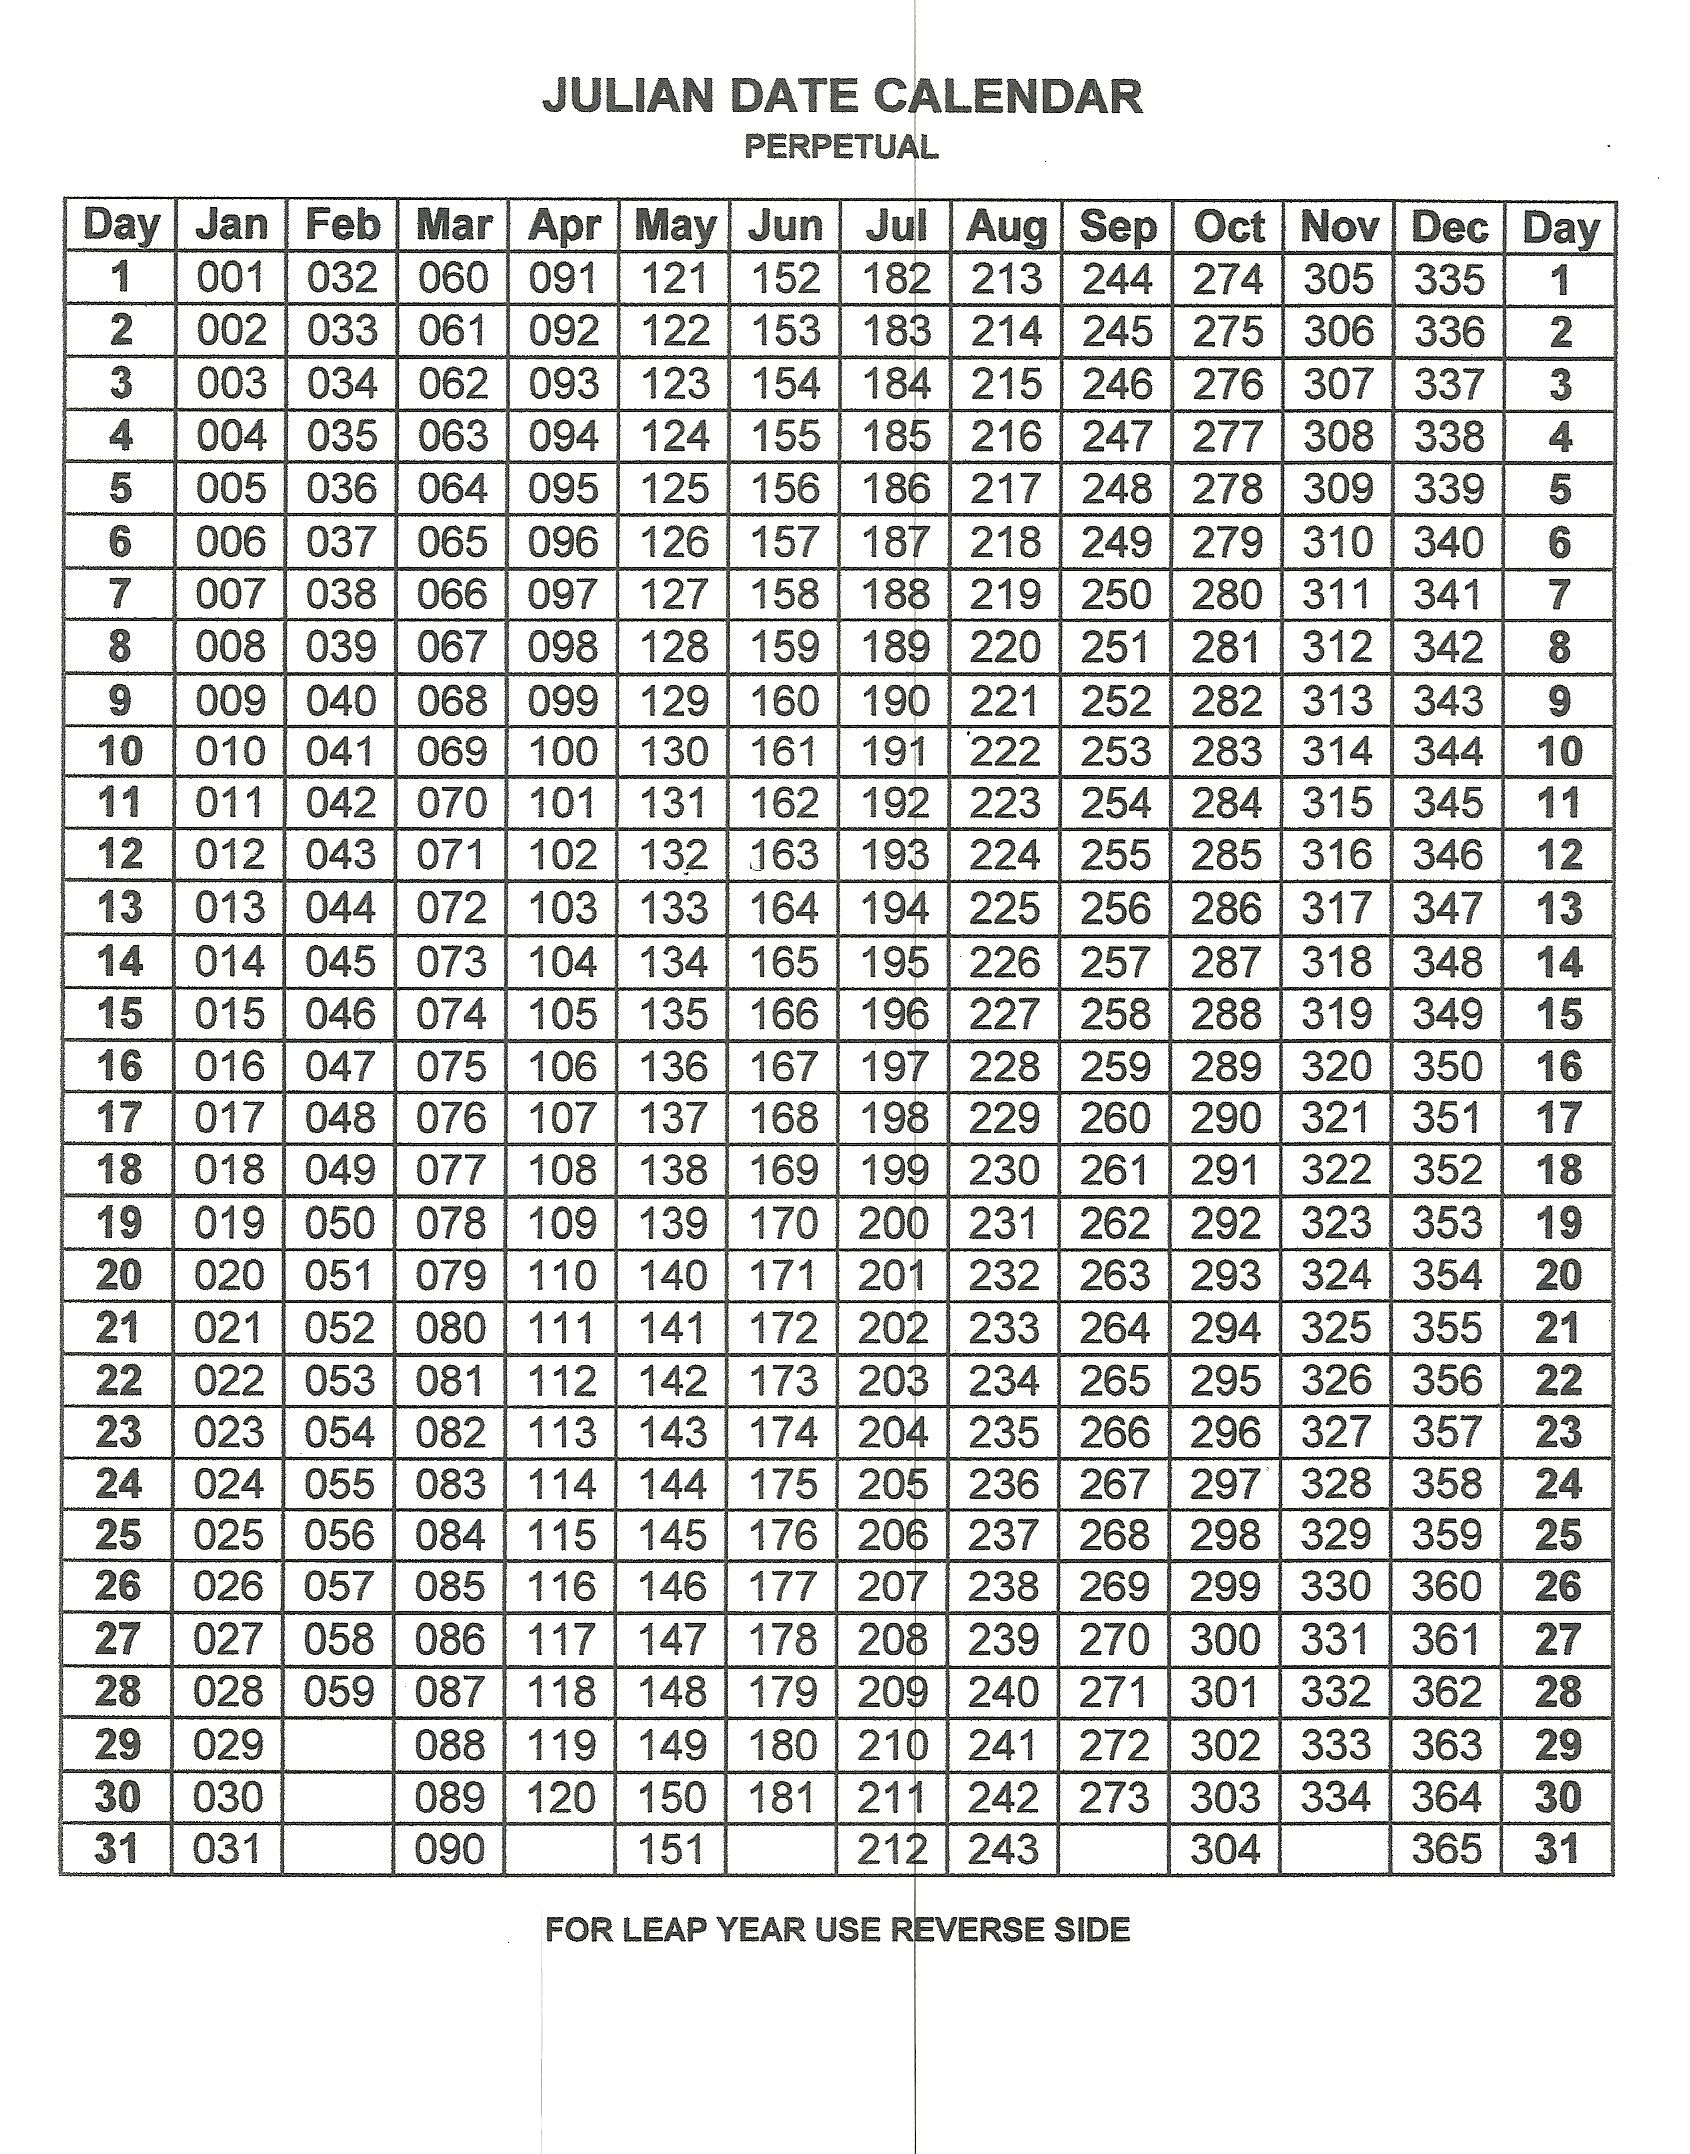 Perpetual Julian Date Calendar | Calendar Printables inside Julian Date For Leap Year